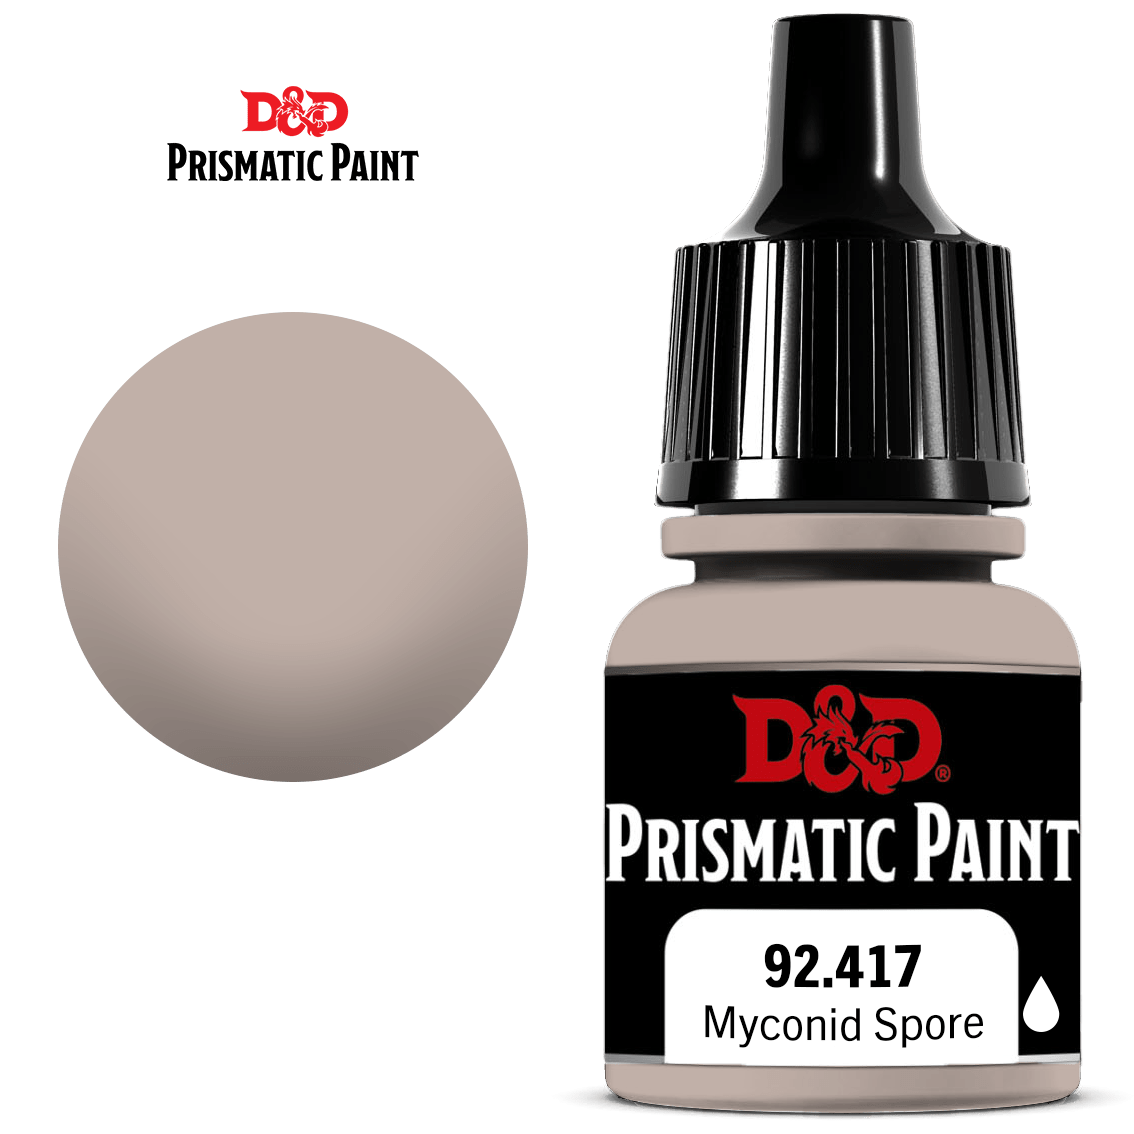 PRISMATIC PAINT: MYCONID SPORE | BD Cosmos